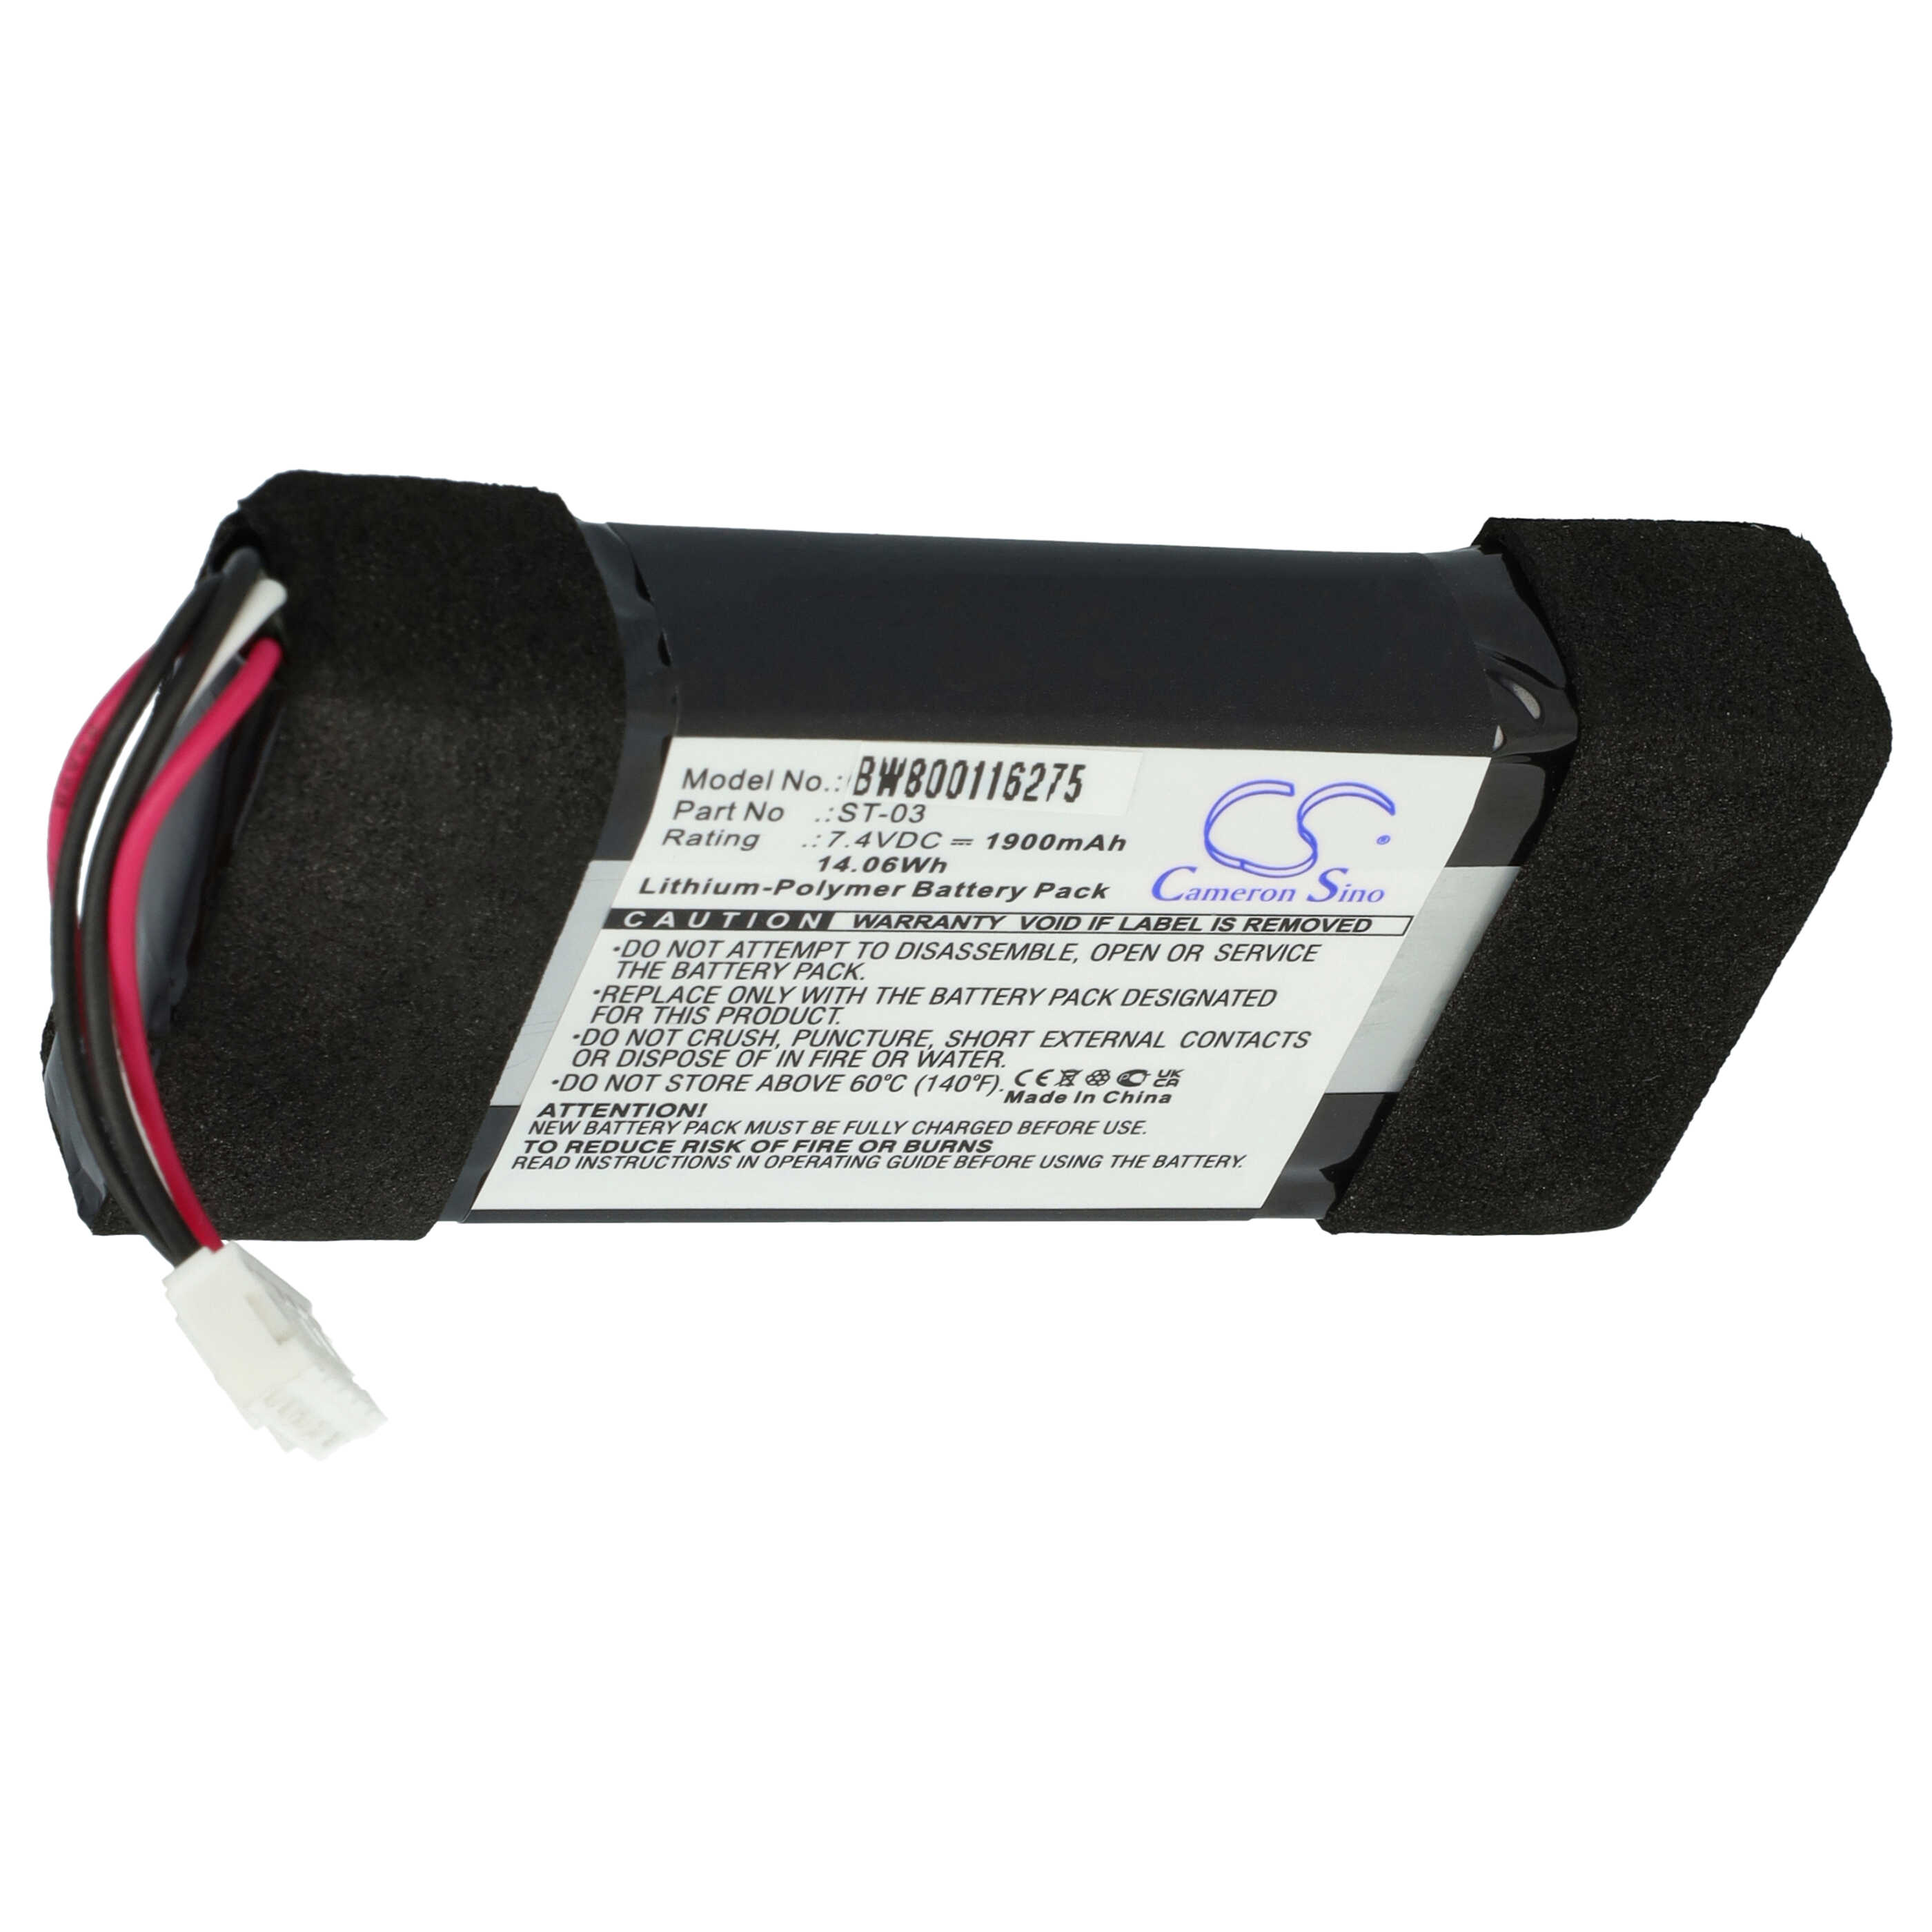 Batterie remplace Sony ST-03 pour enceinte Sony - 1900mAh 7,4V Li-polymère